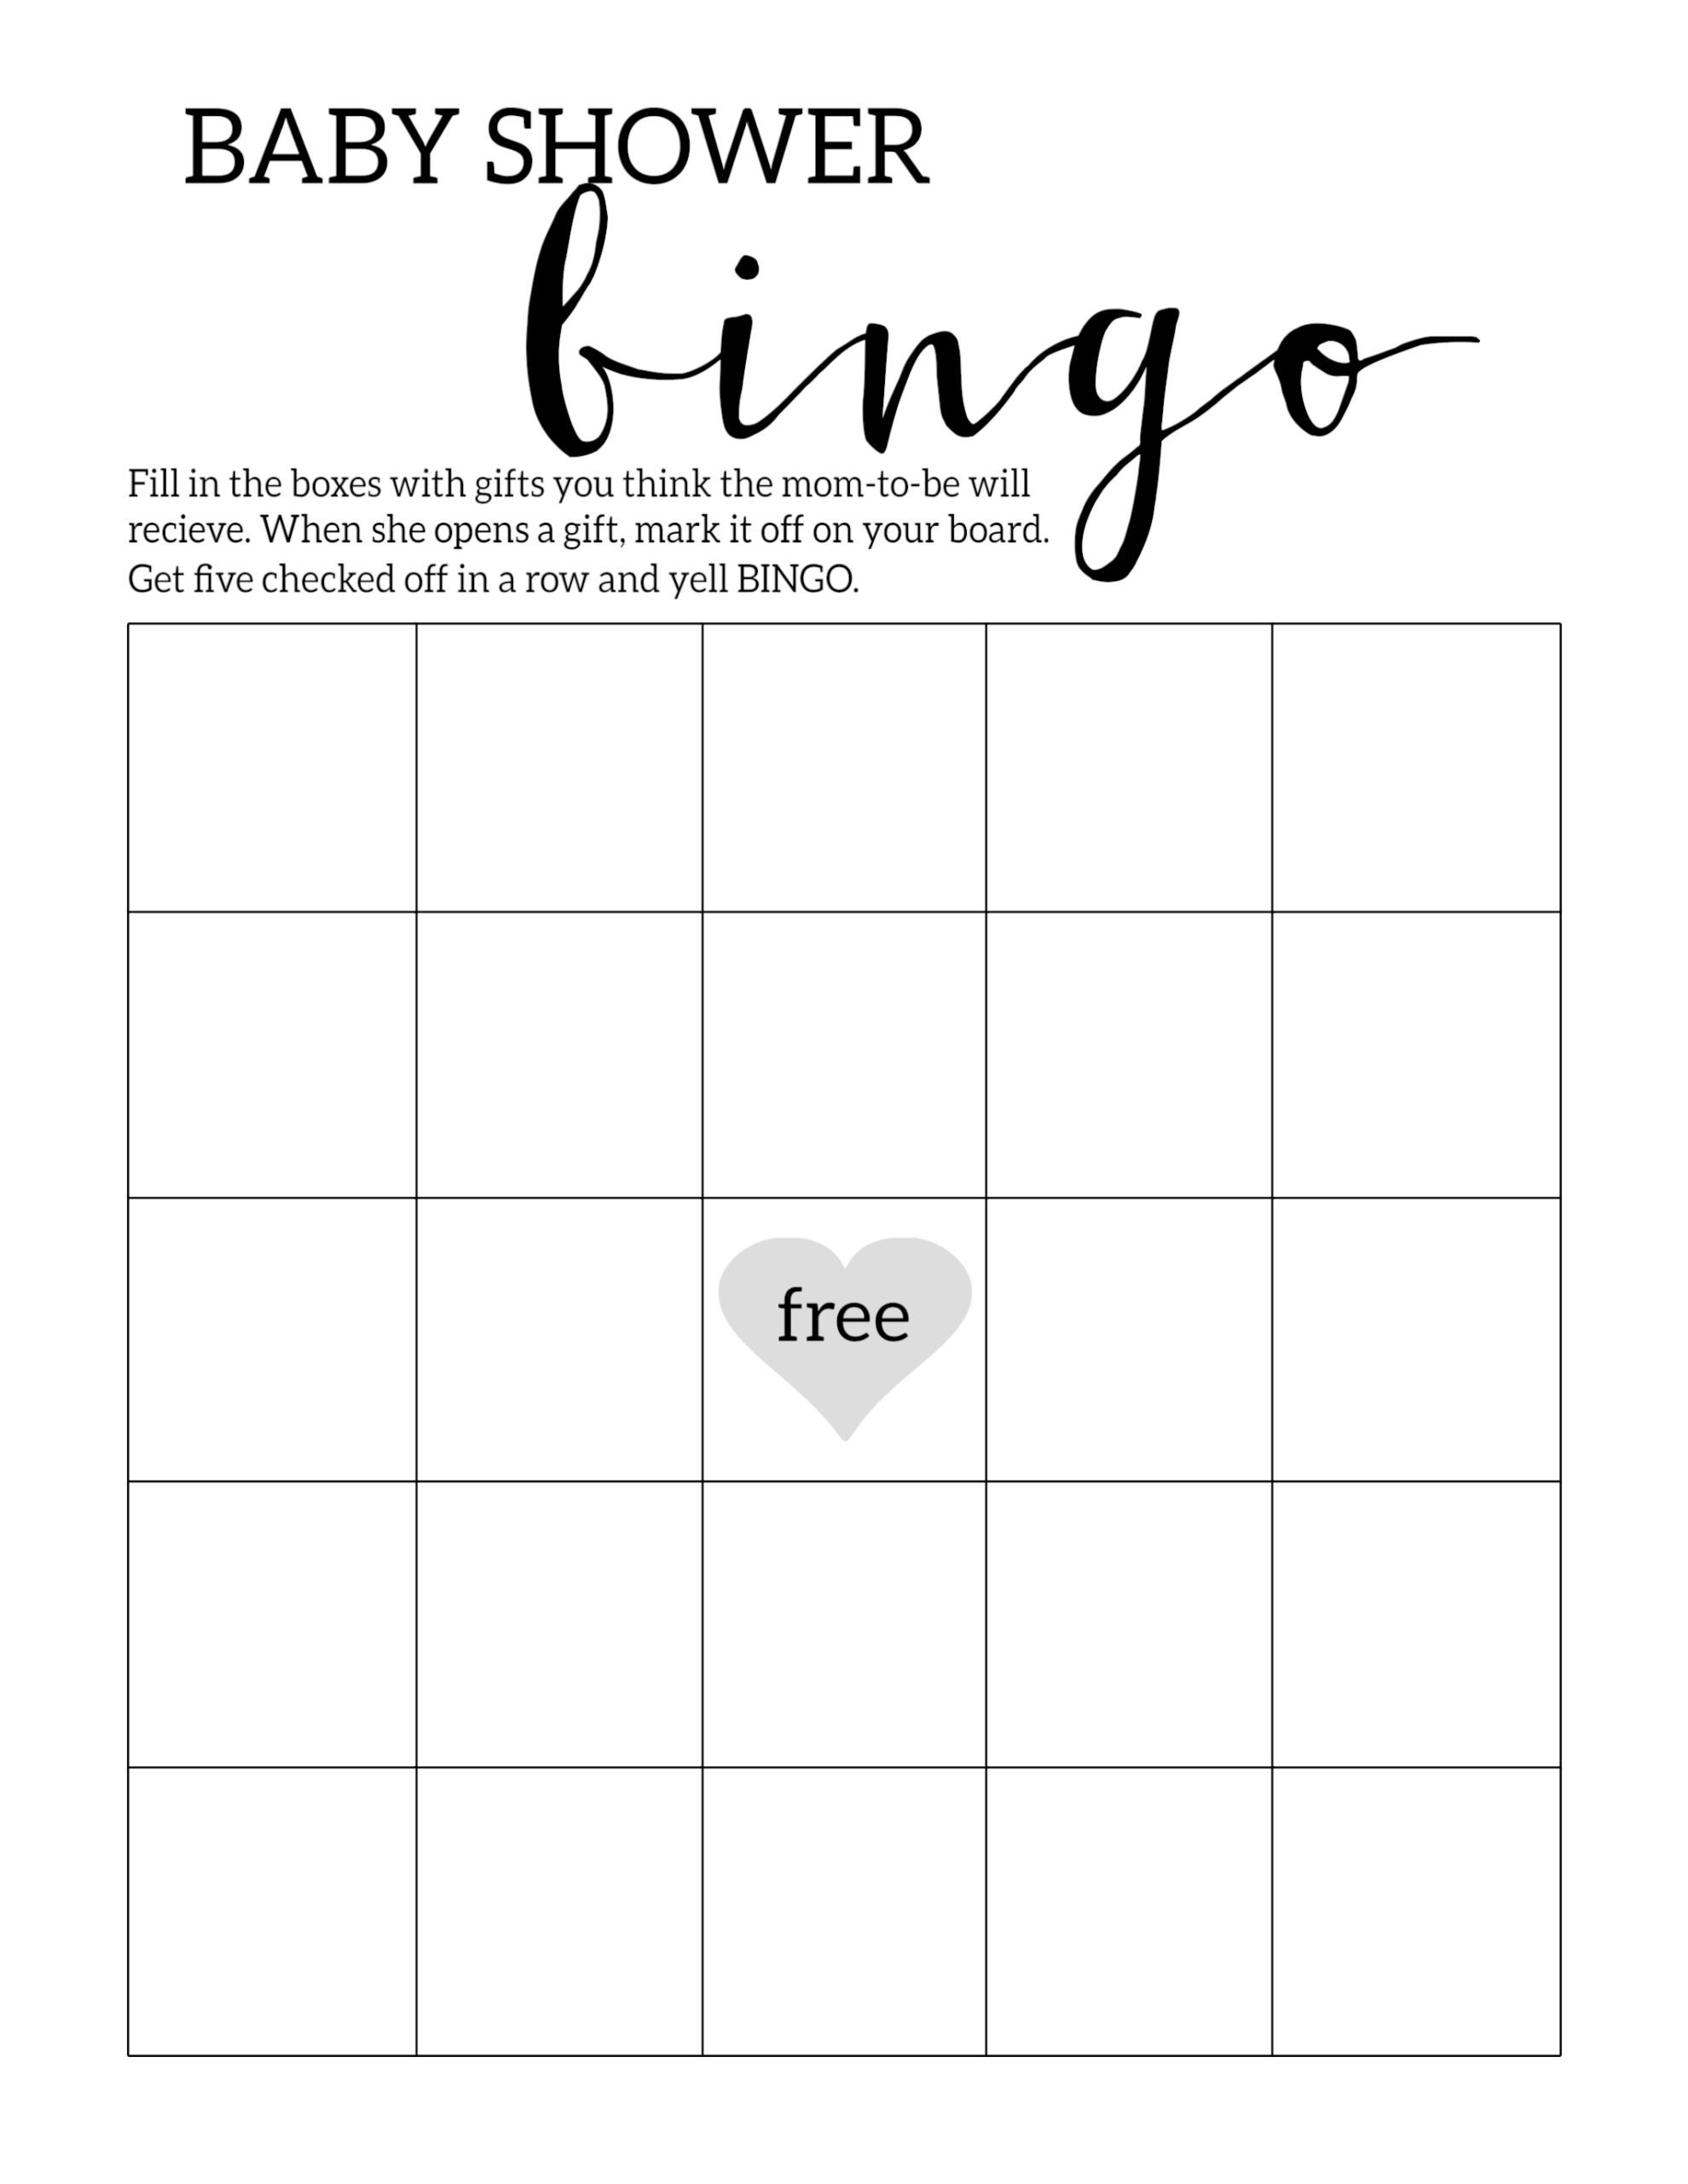 Baby Shower Bingo Printable Cards Template - Paper Trail Design - Printable Bingo Template Free